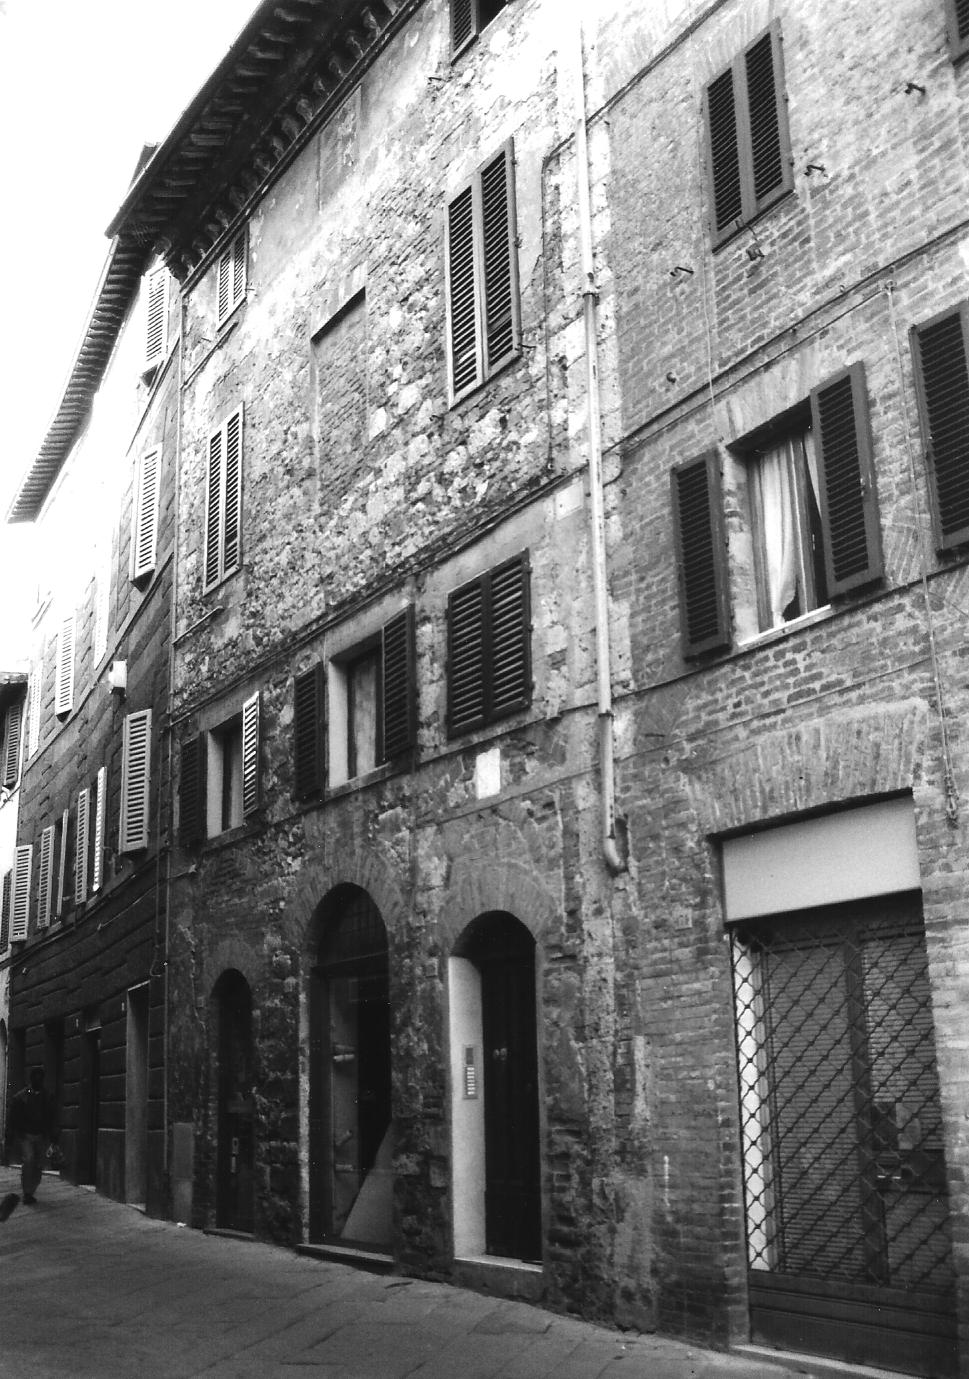 Palazzo in Camollia (palazzo, residenziale) - Siena (SI) 